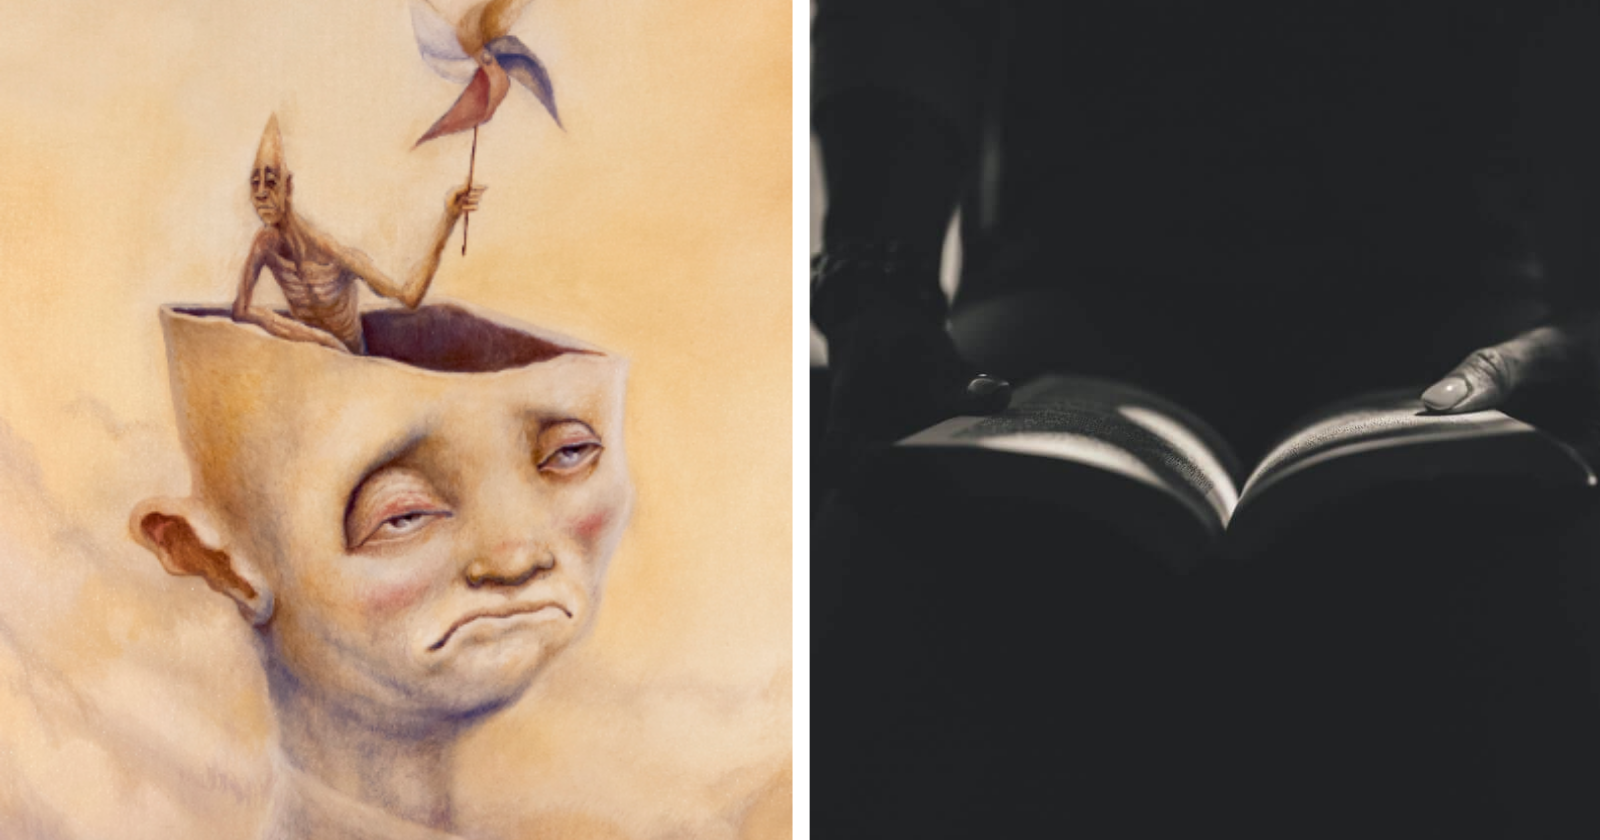 Psicanálise e arte: as pinturas sensacionais (e impactantes) de Susano Correia